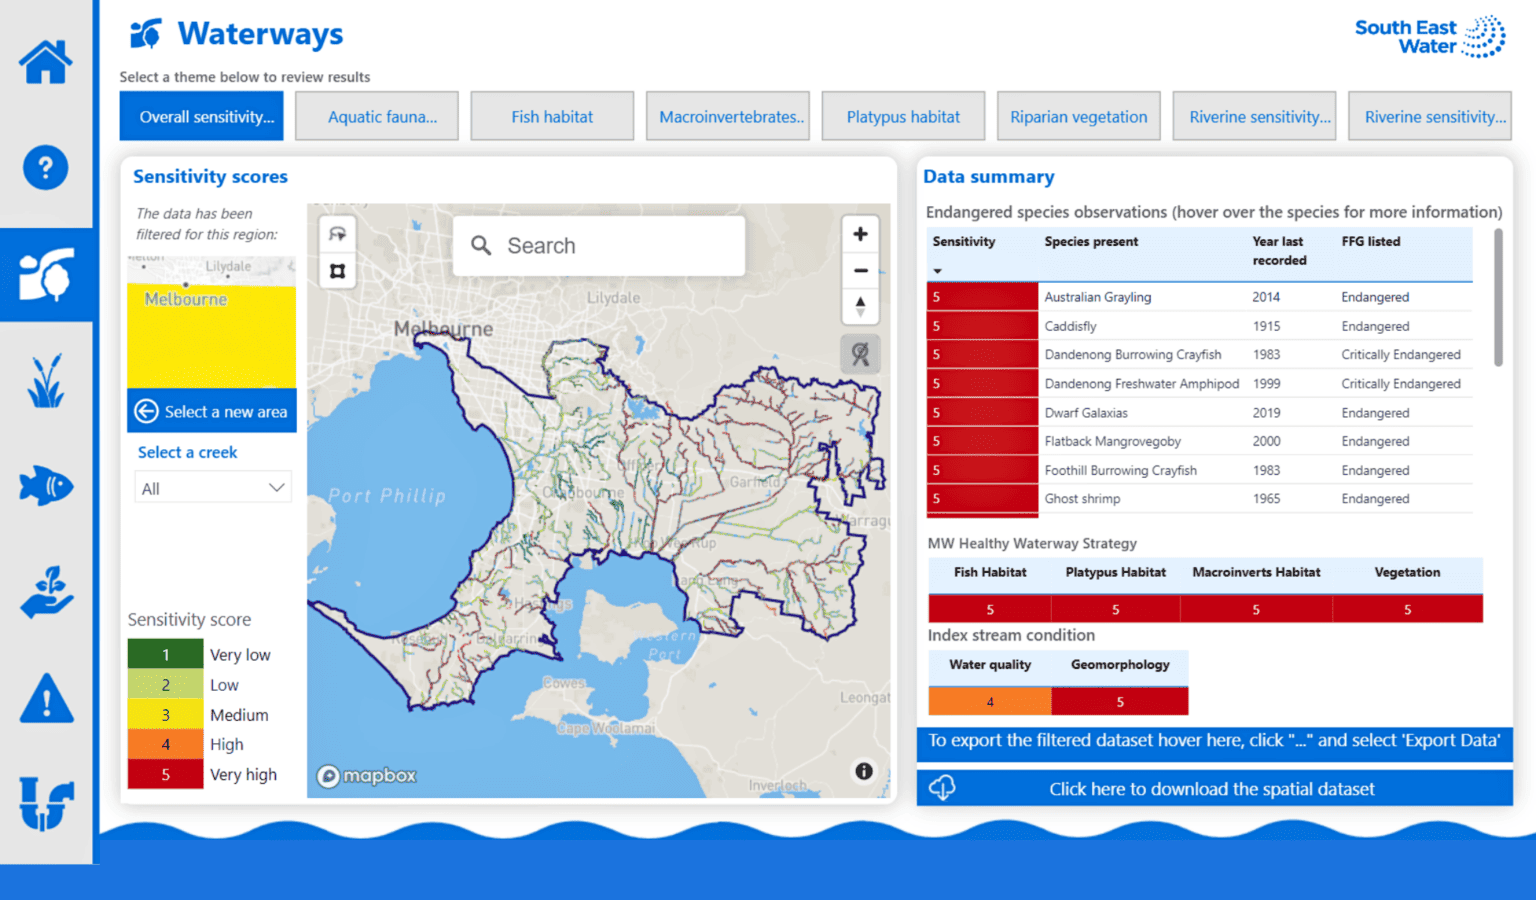 South-East-Water-Environmental-Sensivity-Map-1536x900